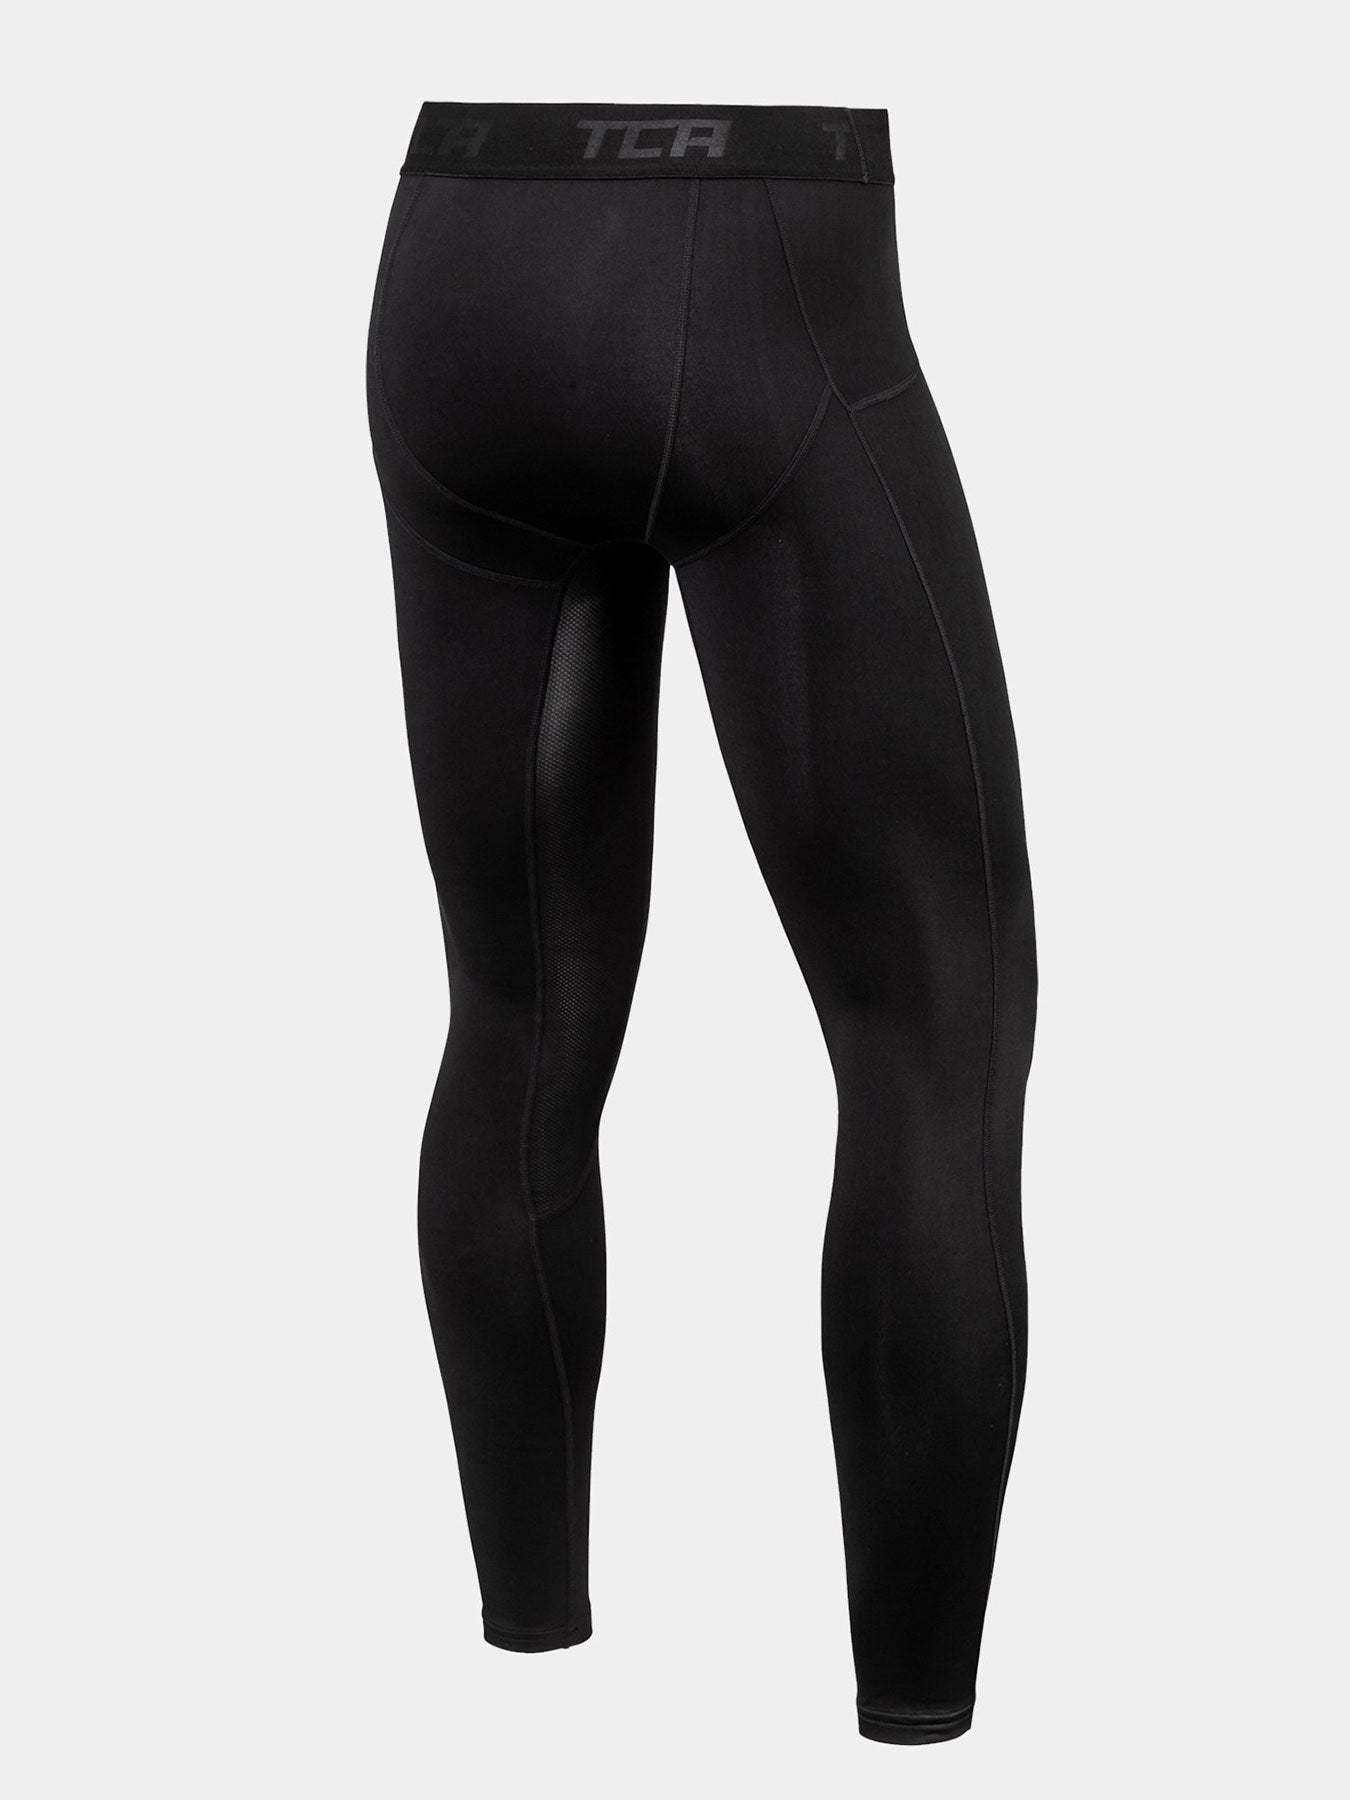 Nike Hyperwarm Tight - Black - Large : : Clothing